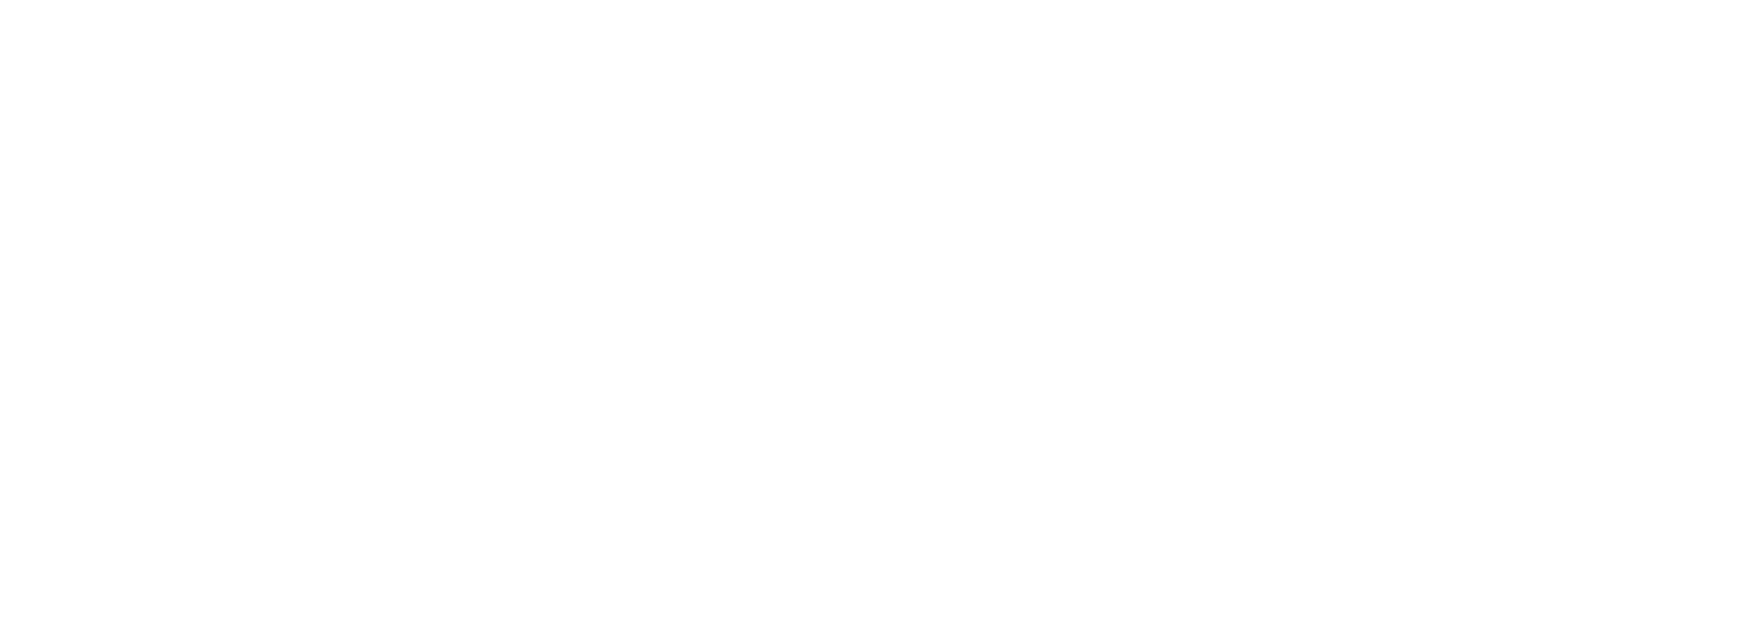 The Health Plan's logo